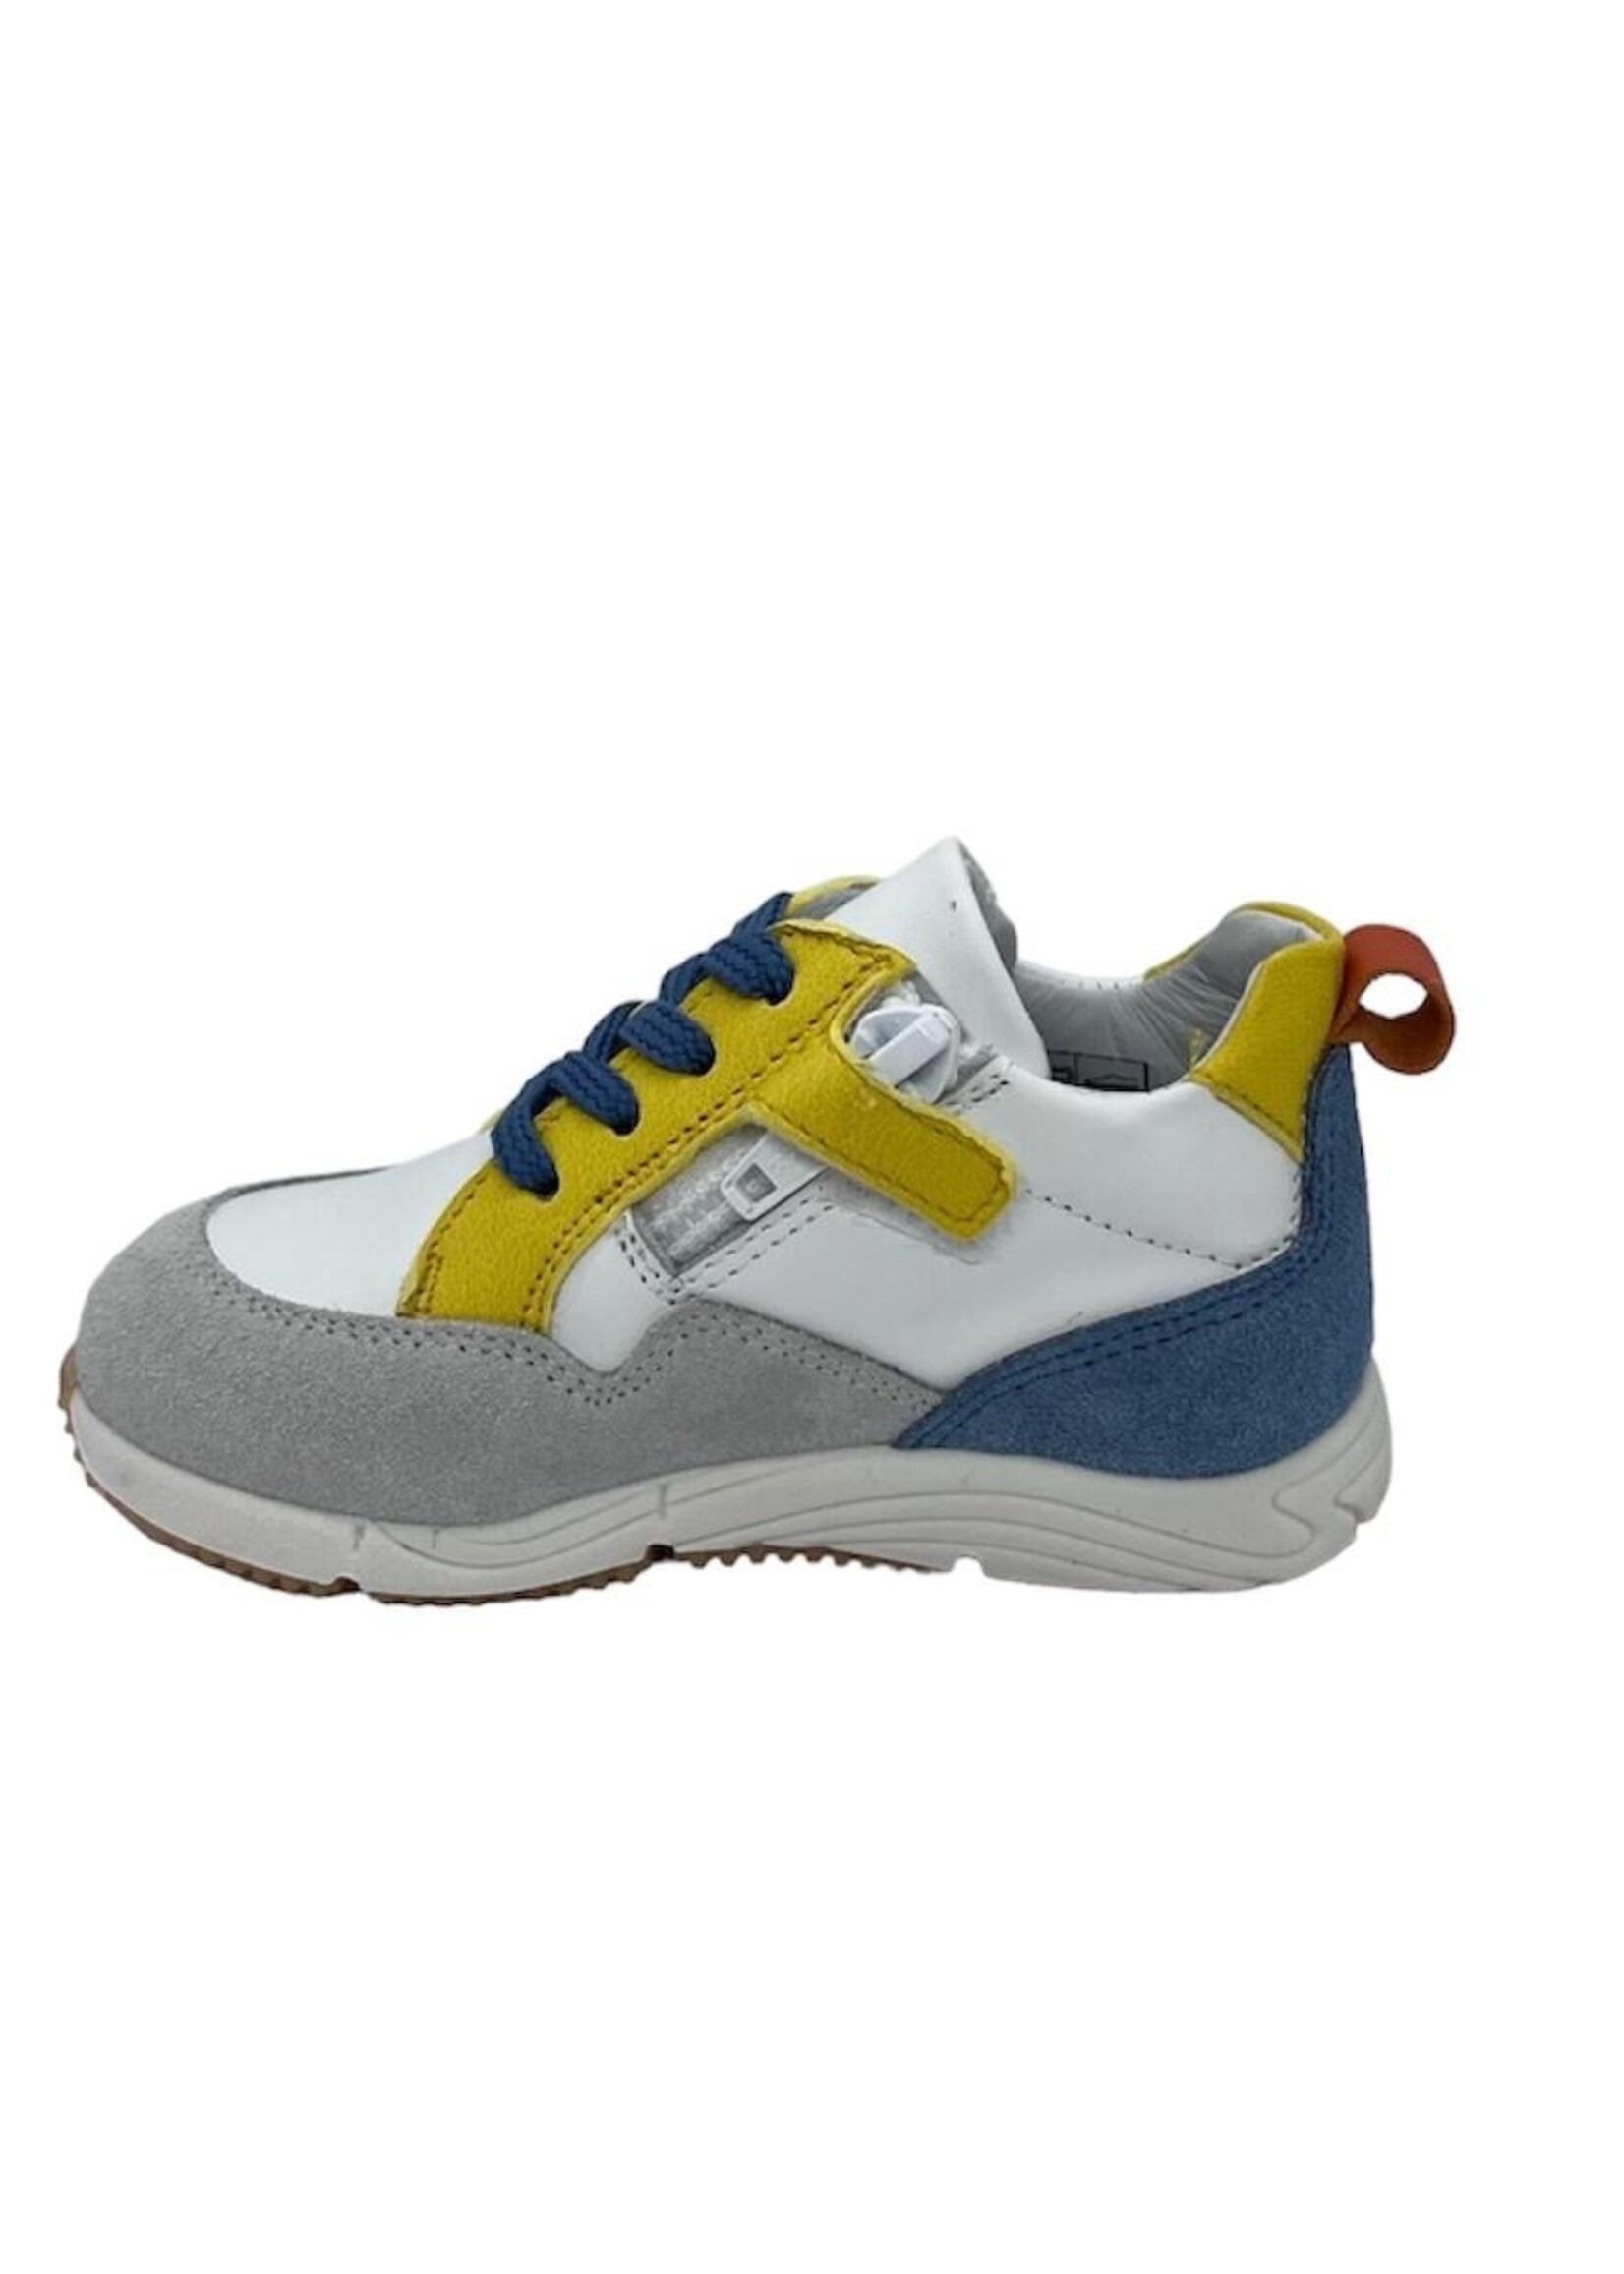 La Triboo 9206 sneaker wit grijs blauw geel